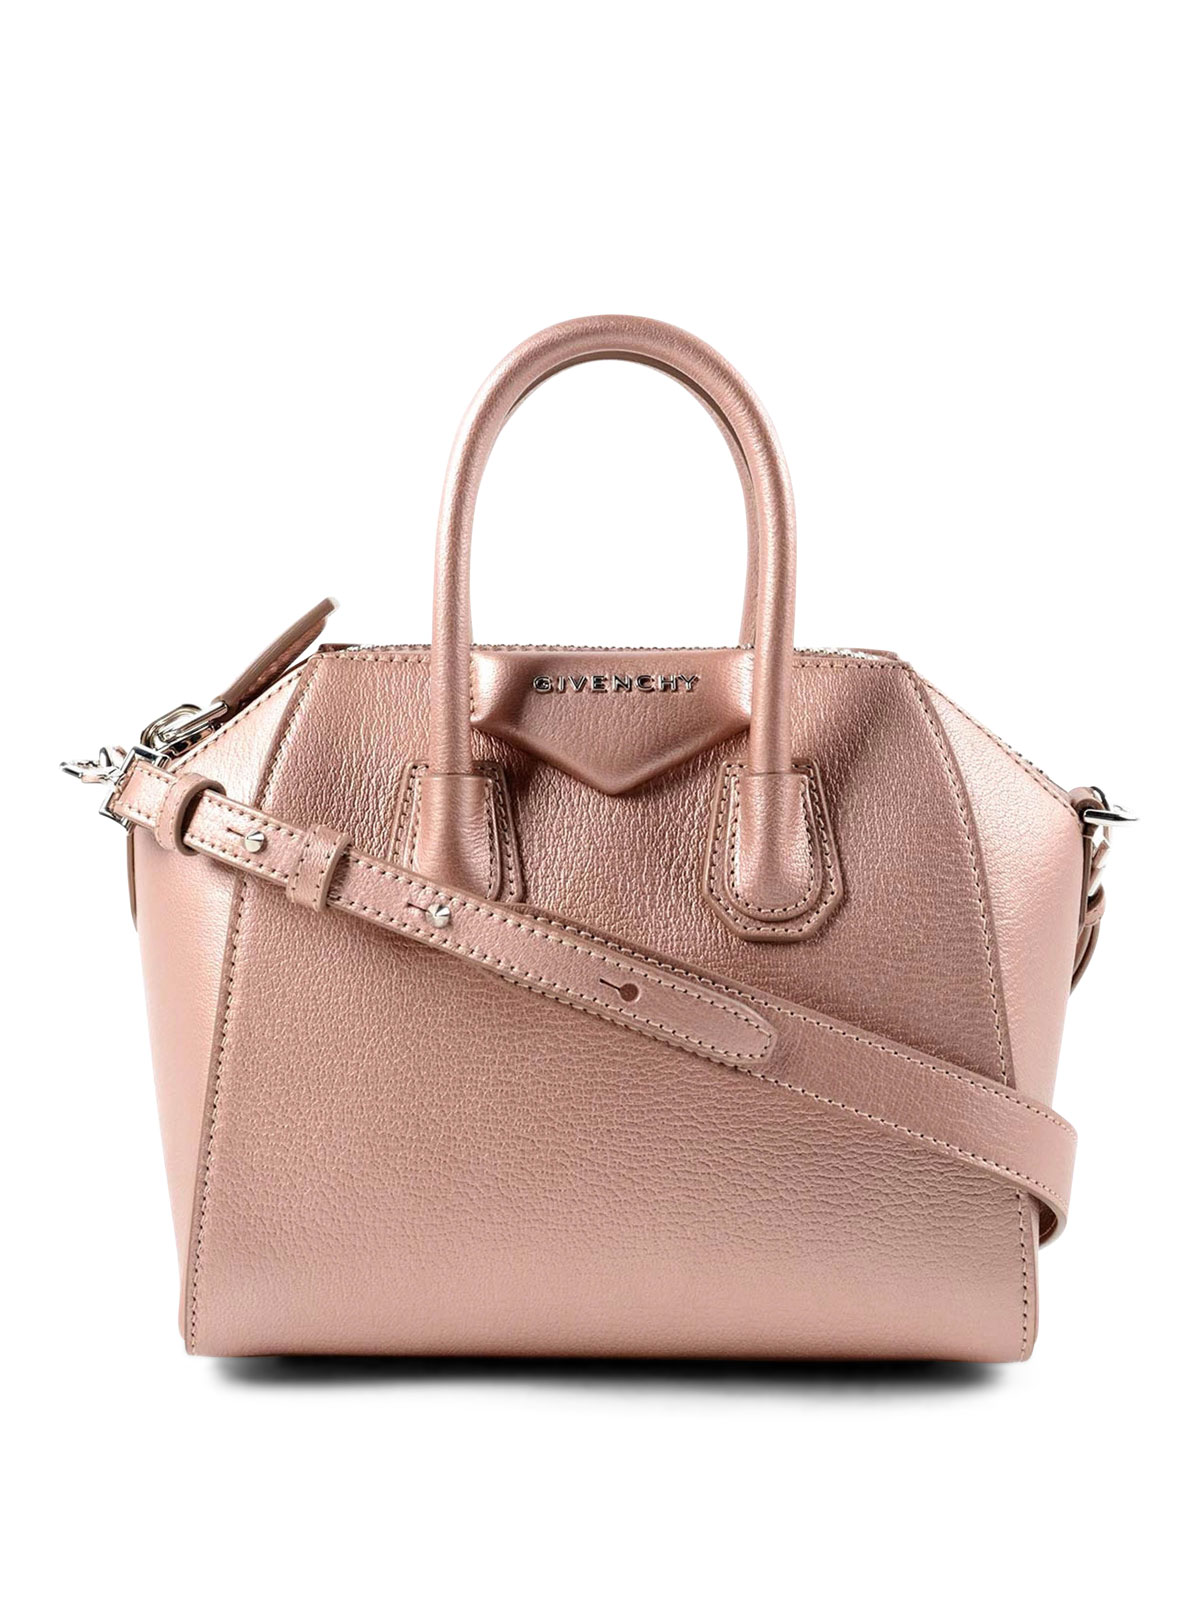 Givenchy 'antigona Mini' Shoulder Bag in Brown